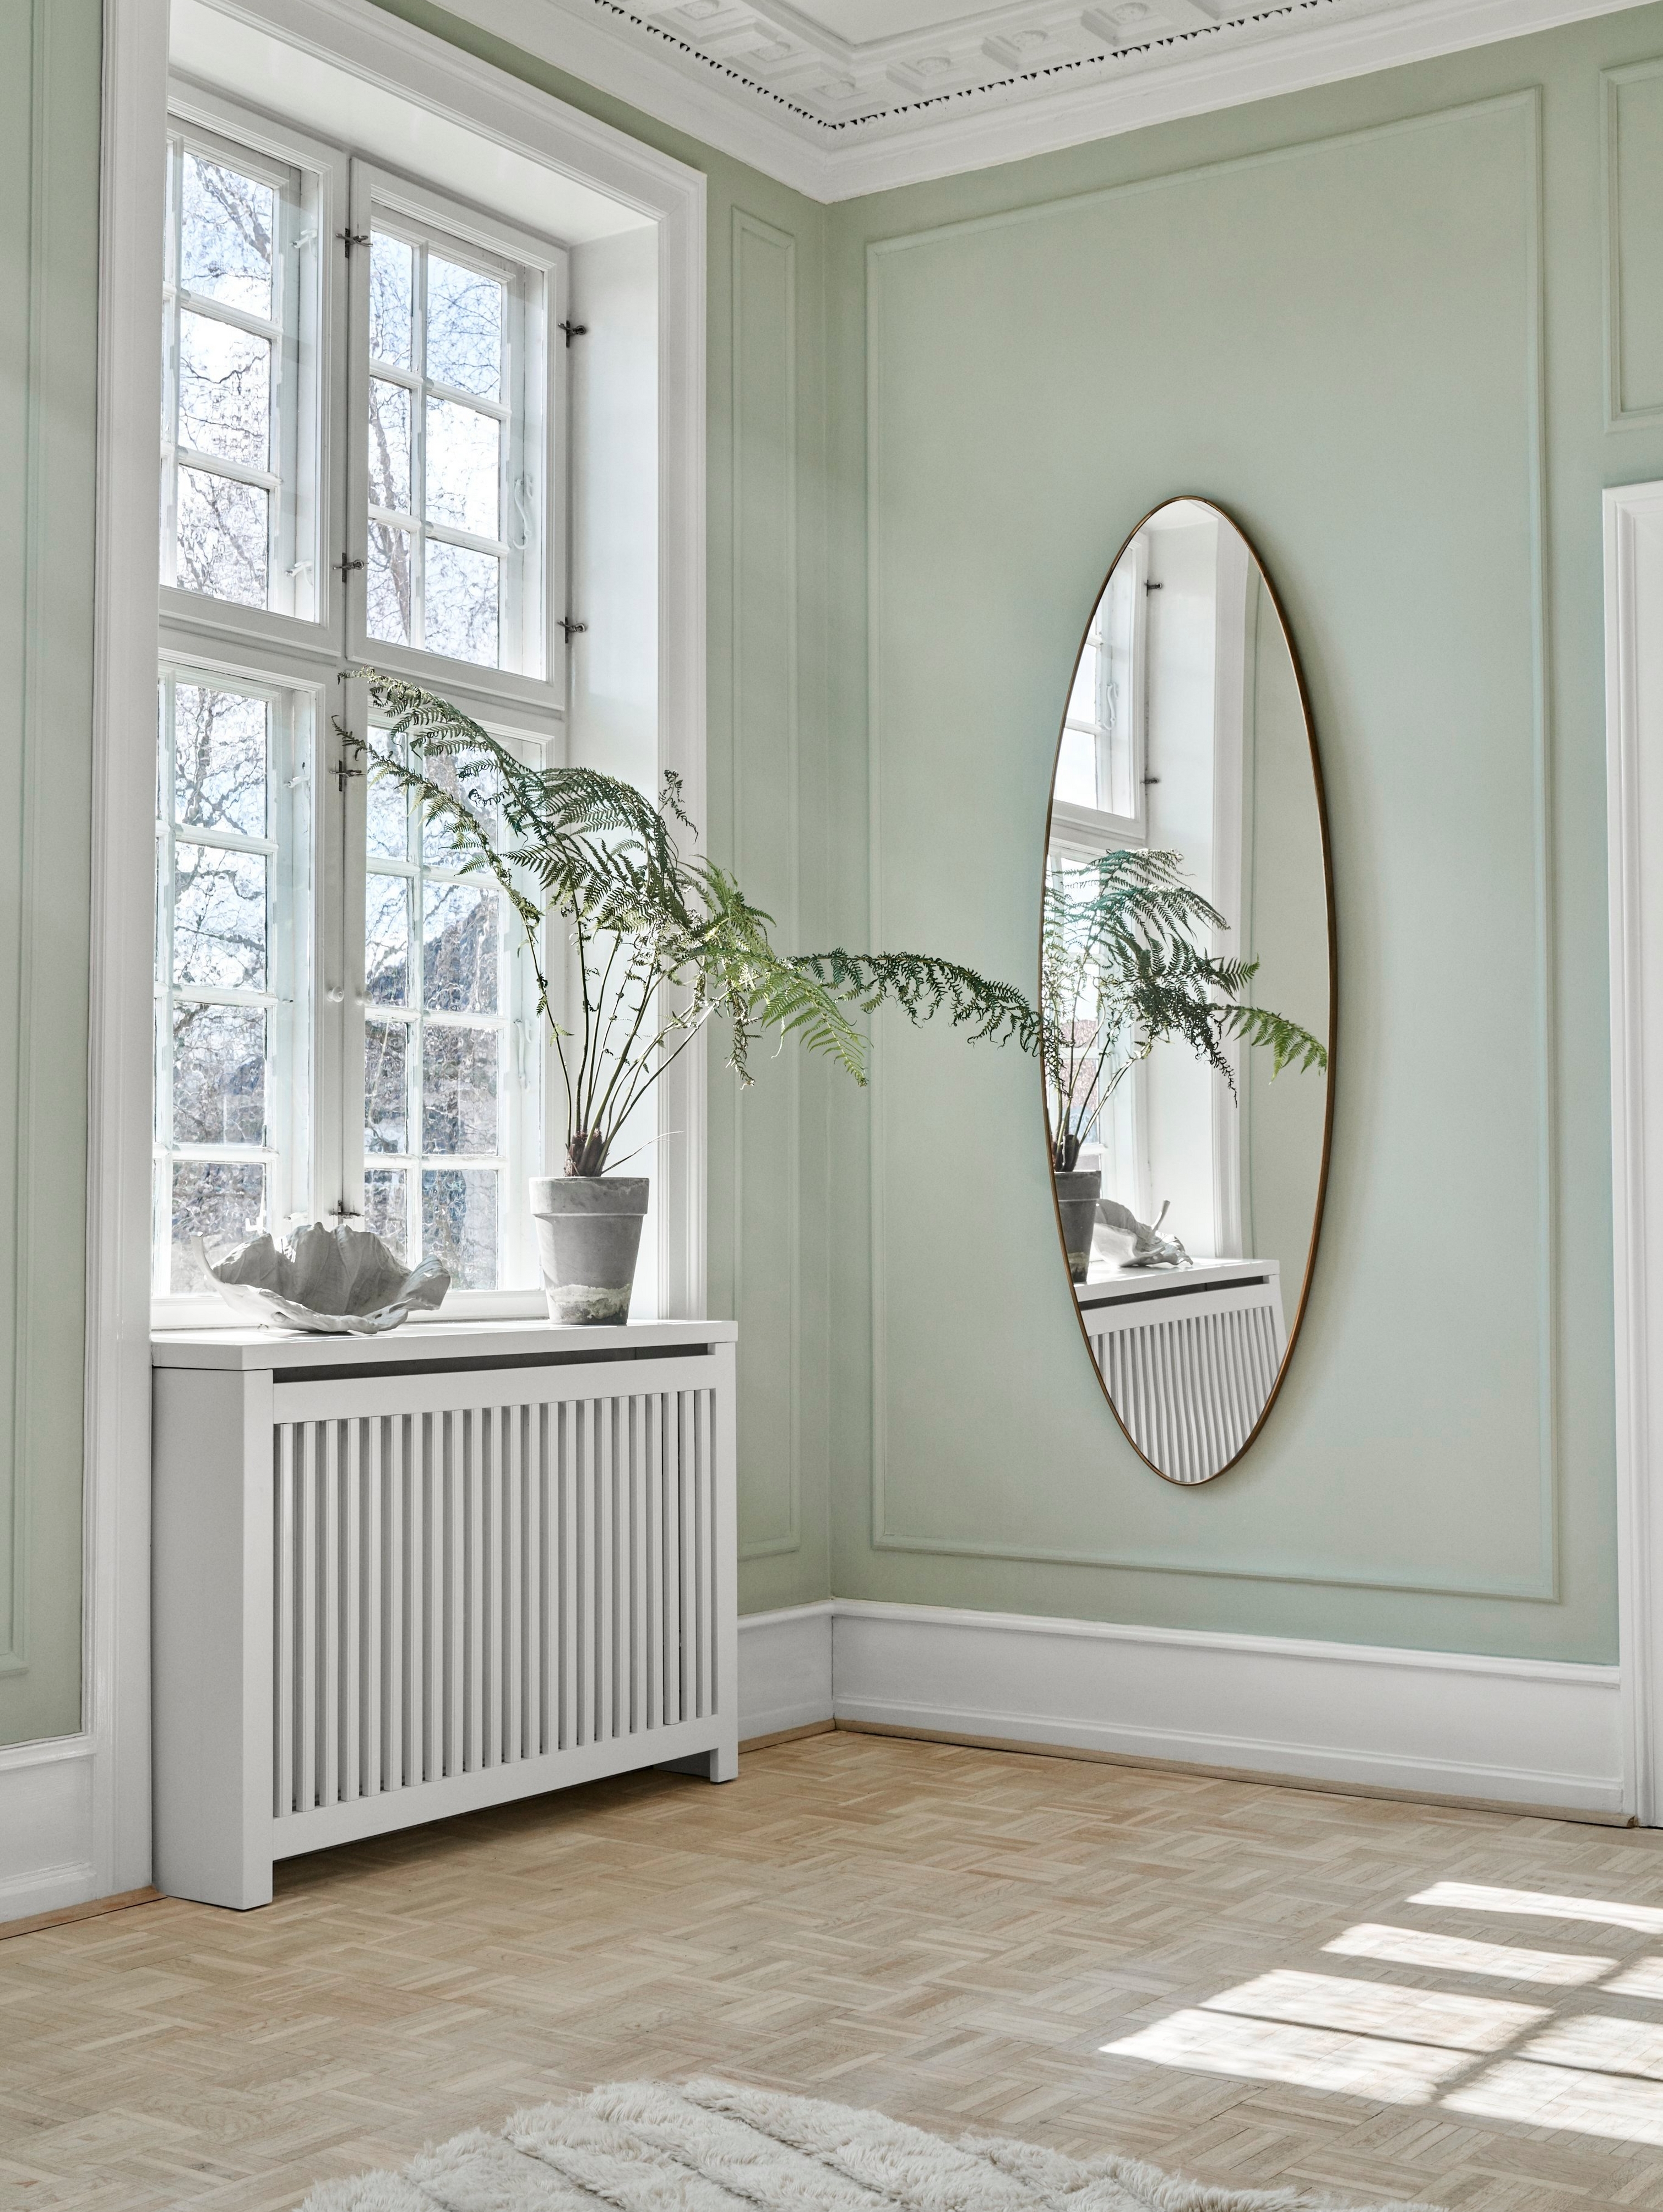 Bright corner featuring a mirror, plant and the Magnolia sculpture.